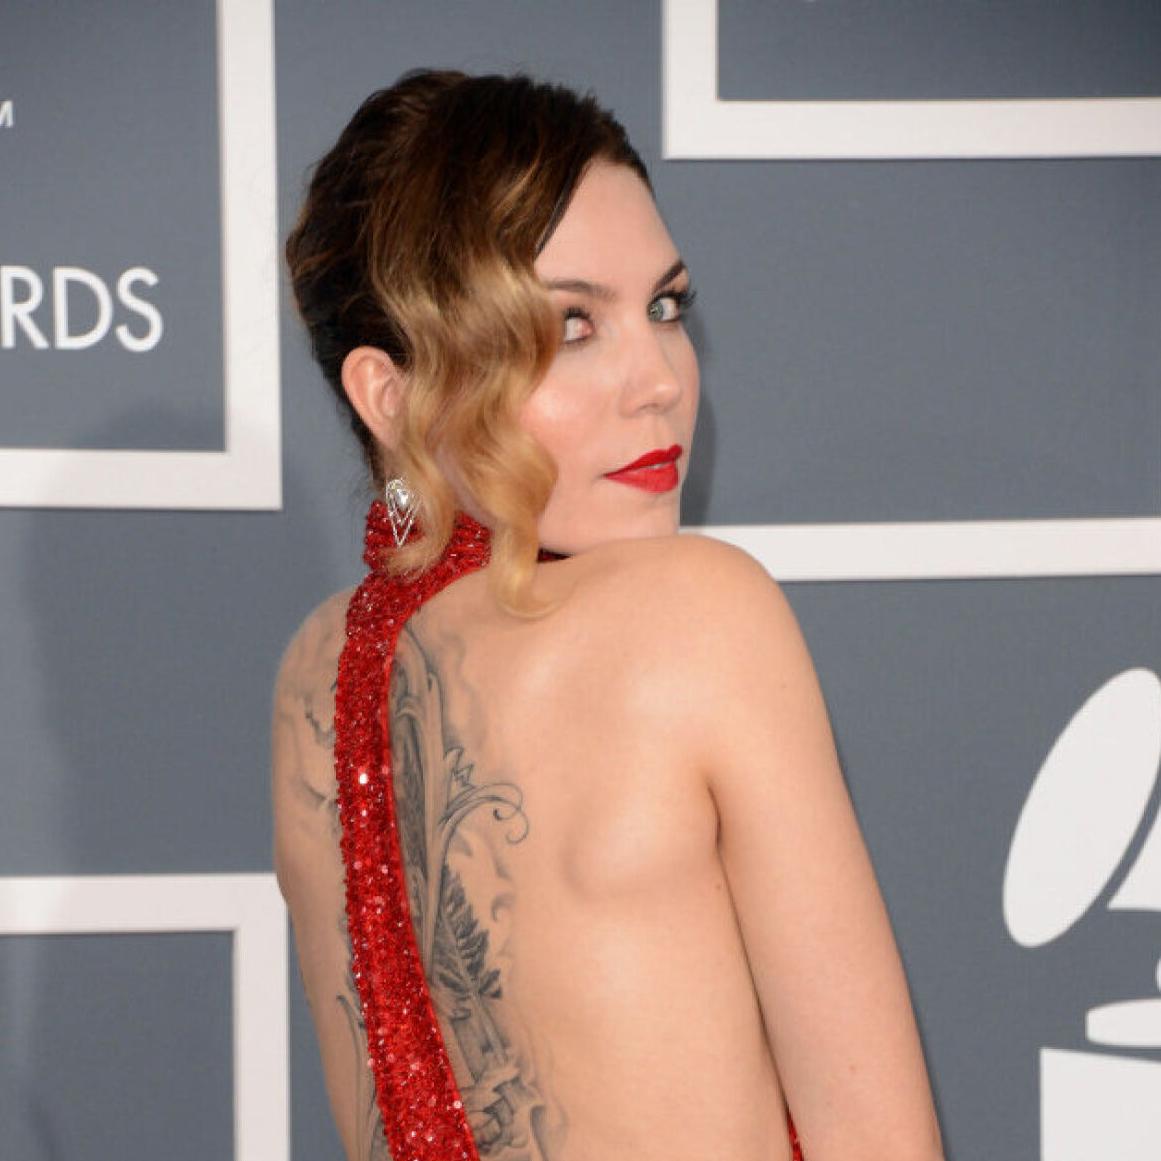 CBS Is Right to Ban the Boobs With Grammy Awards 'Wardrobe Advisory